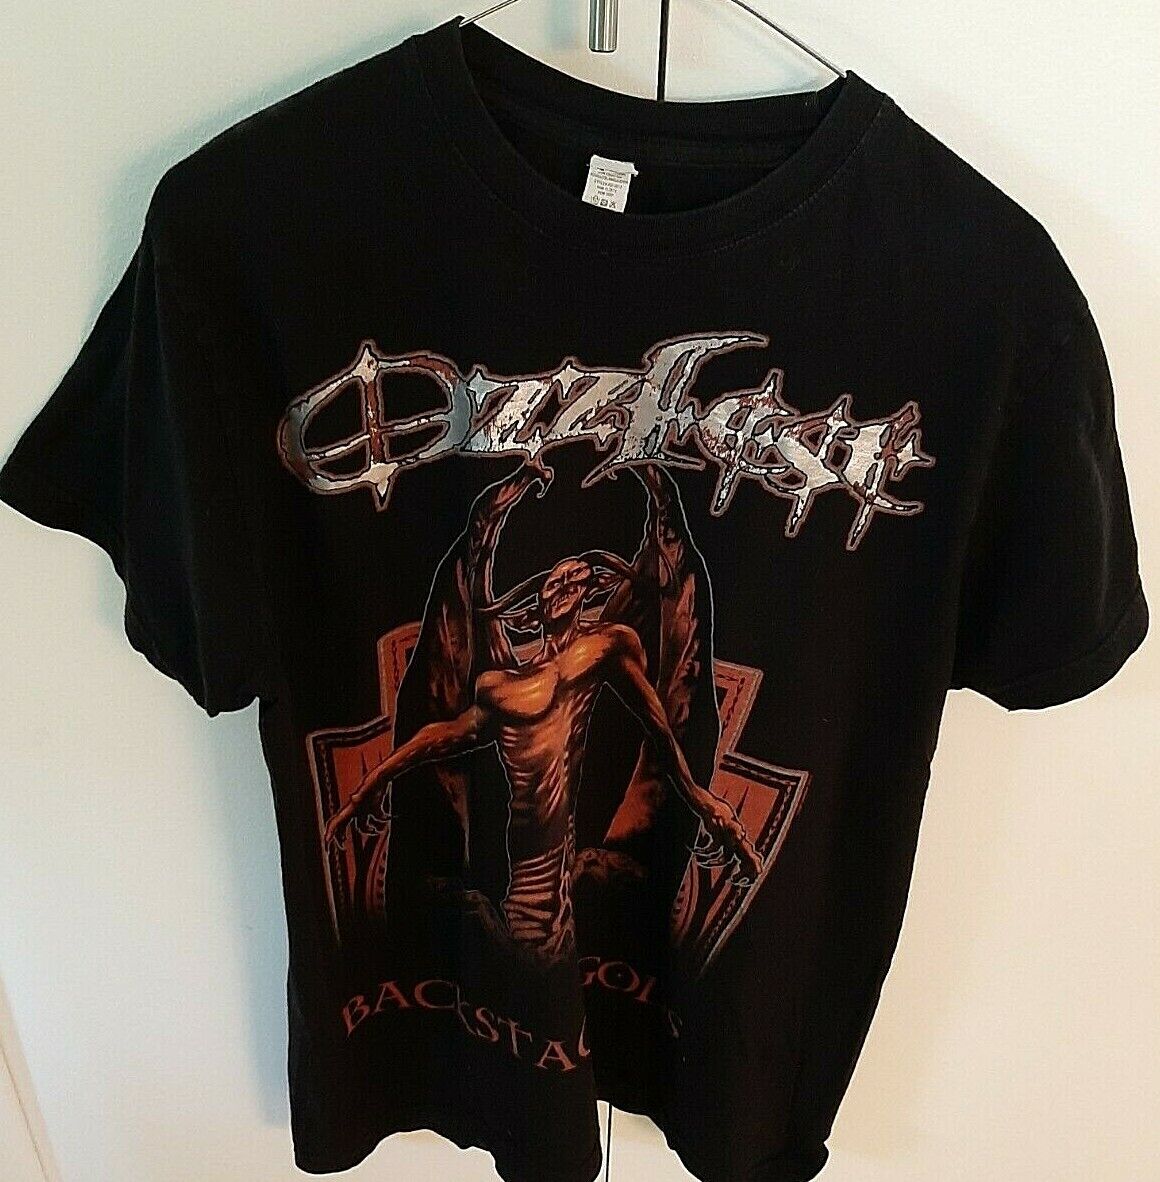 New! Rare! Ozzfest 2010 Tour "backstage Gods" T-shirt! Never Worn!  Size M